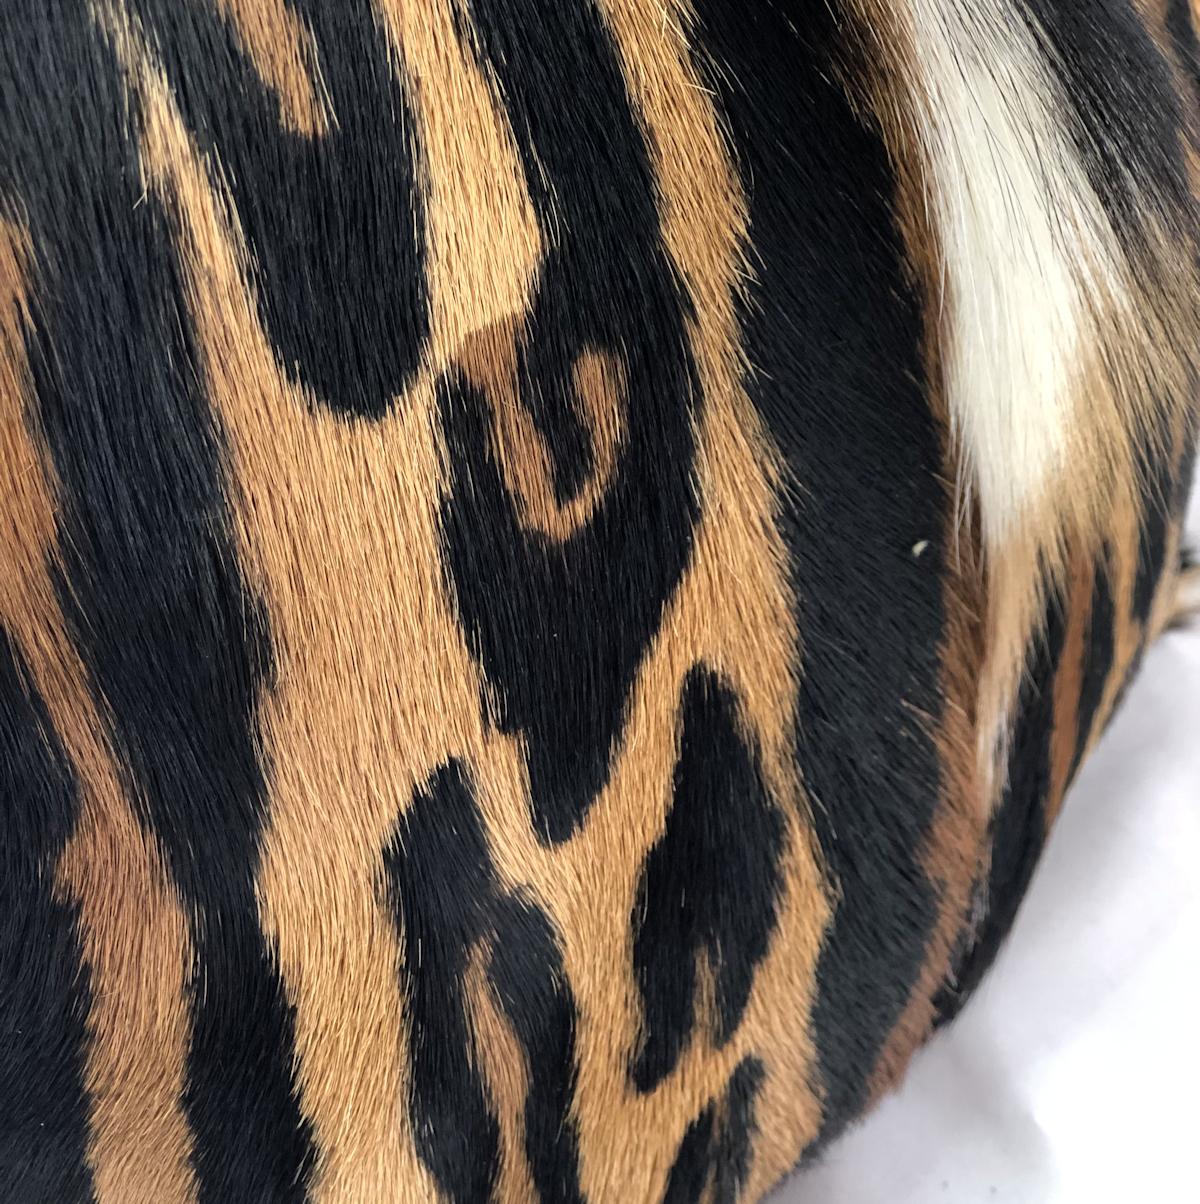 Contemporary Leopard Fur Pillow, Springbok Skin 16x16